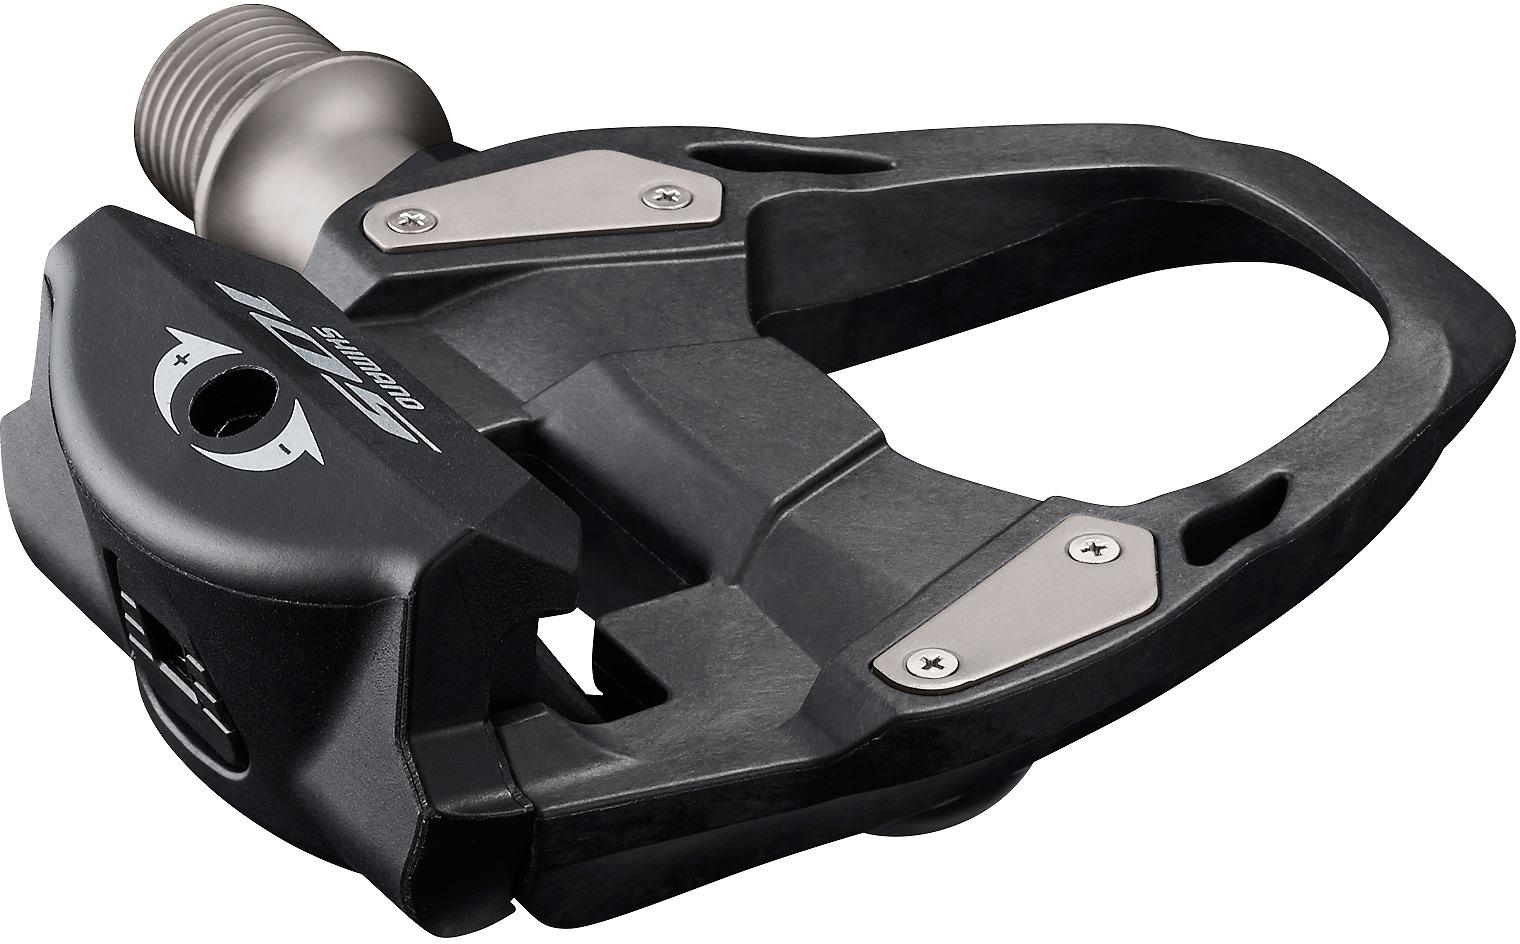 Shimano 105 R7000 Carbon Pedals - Black